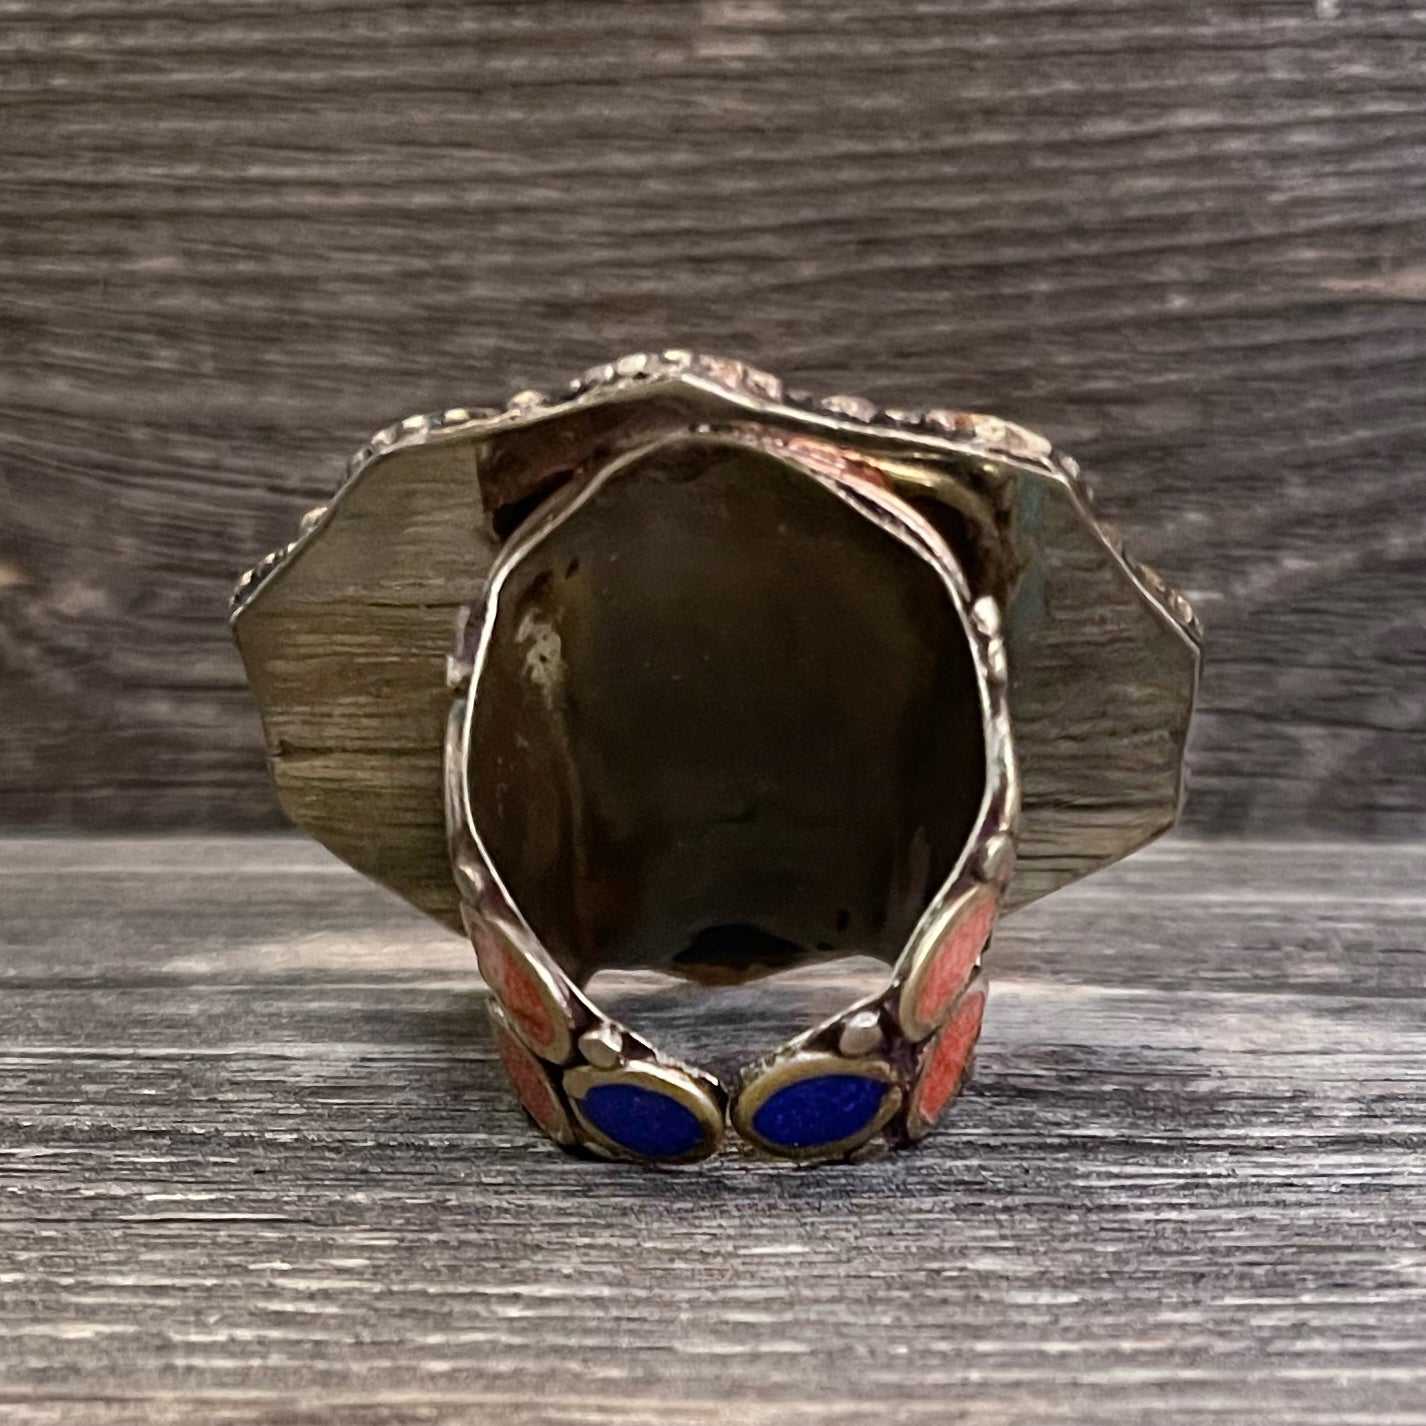 Big statement Flower Tibetan ring with Turquoise, Coral and Lapis Lazuli gemstone